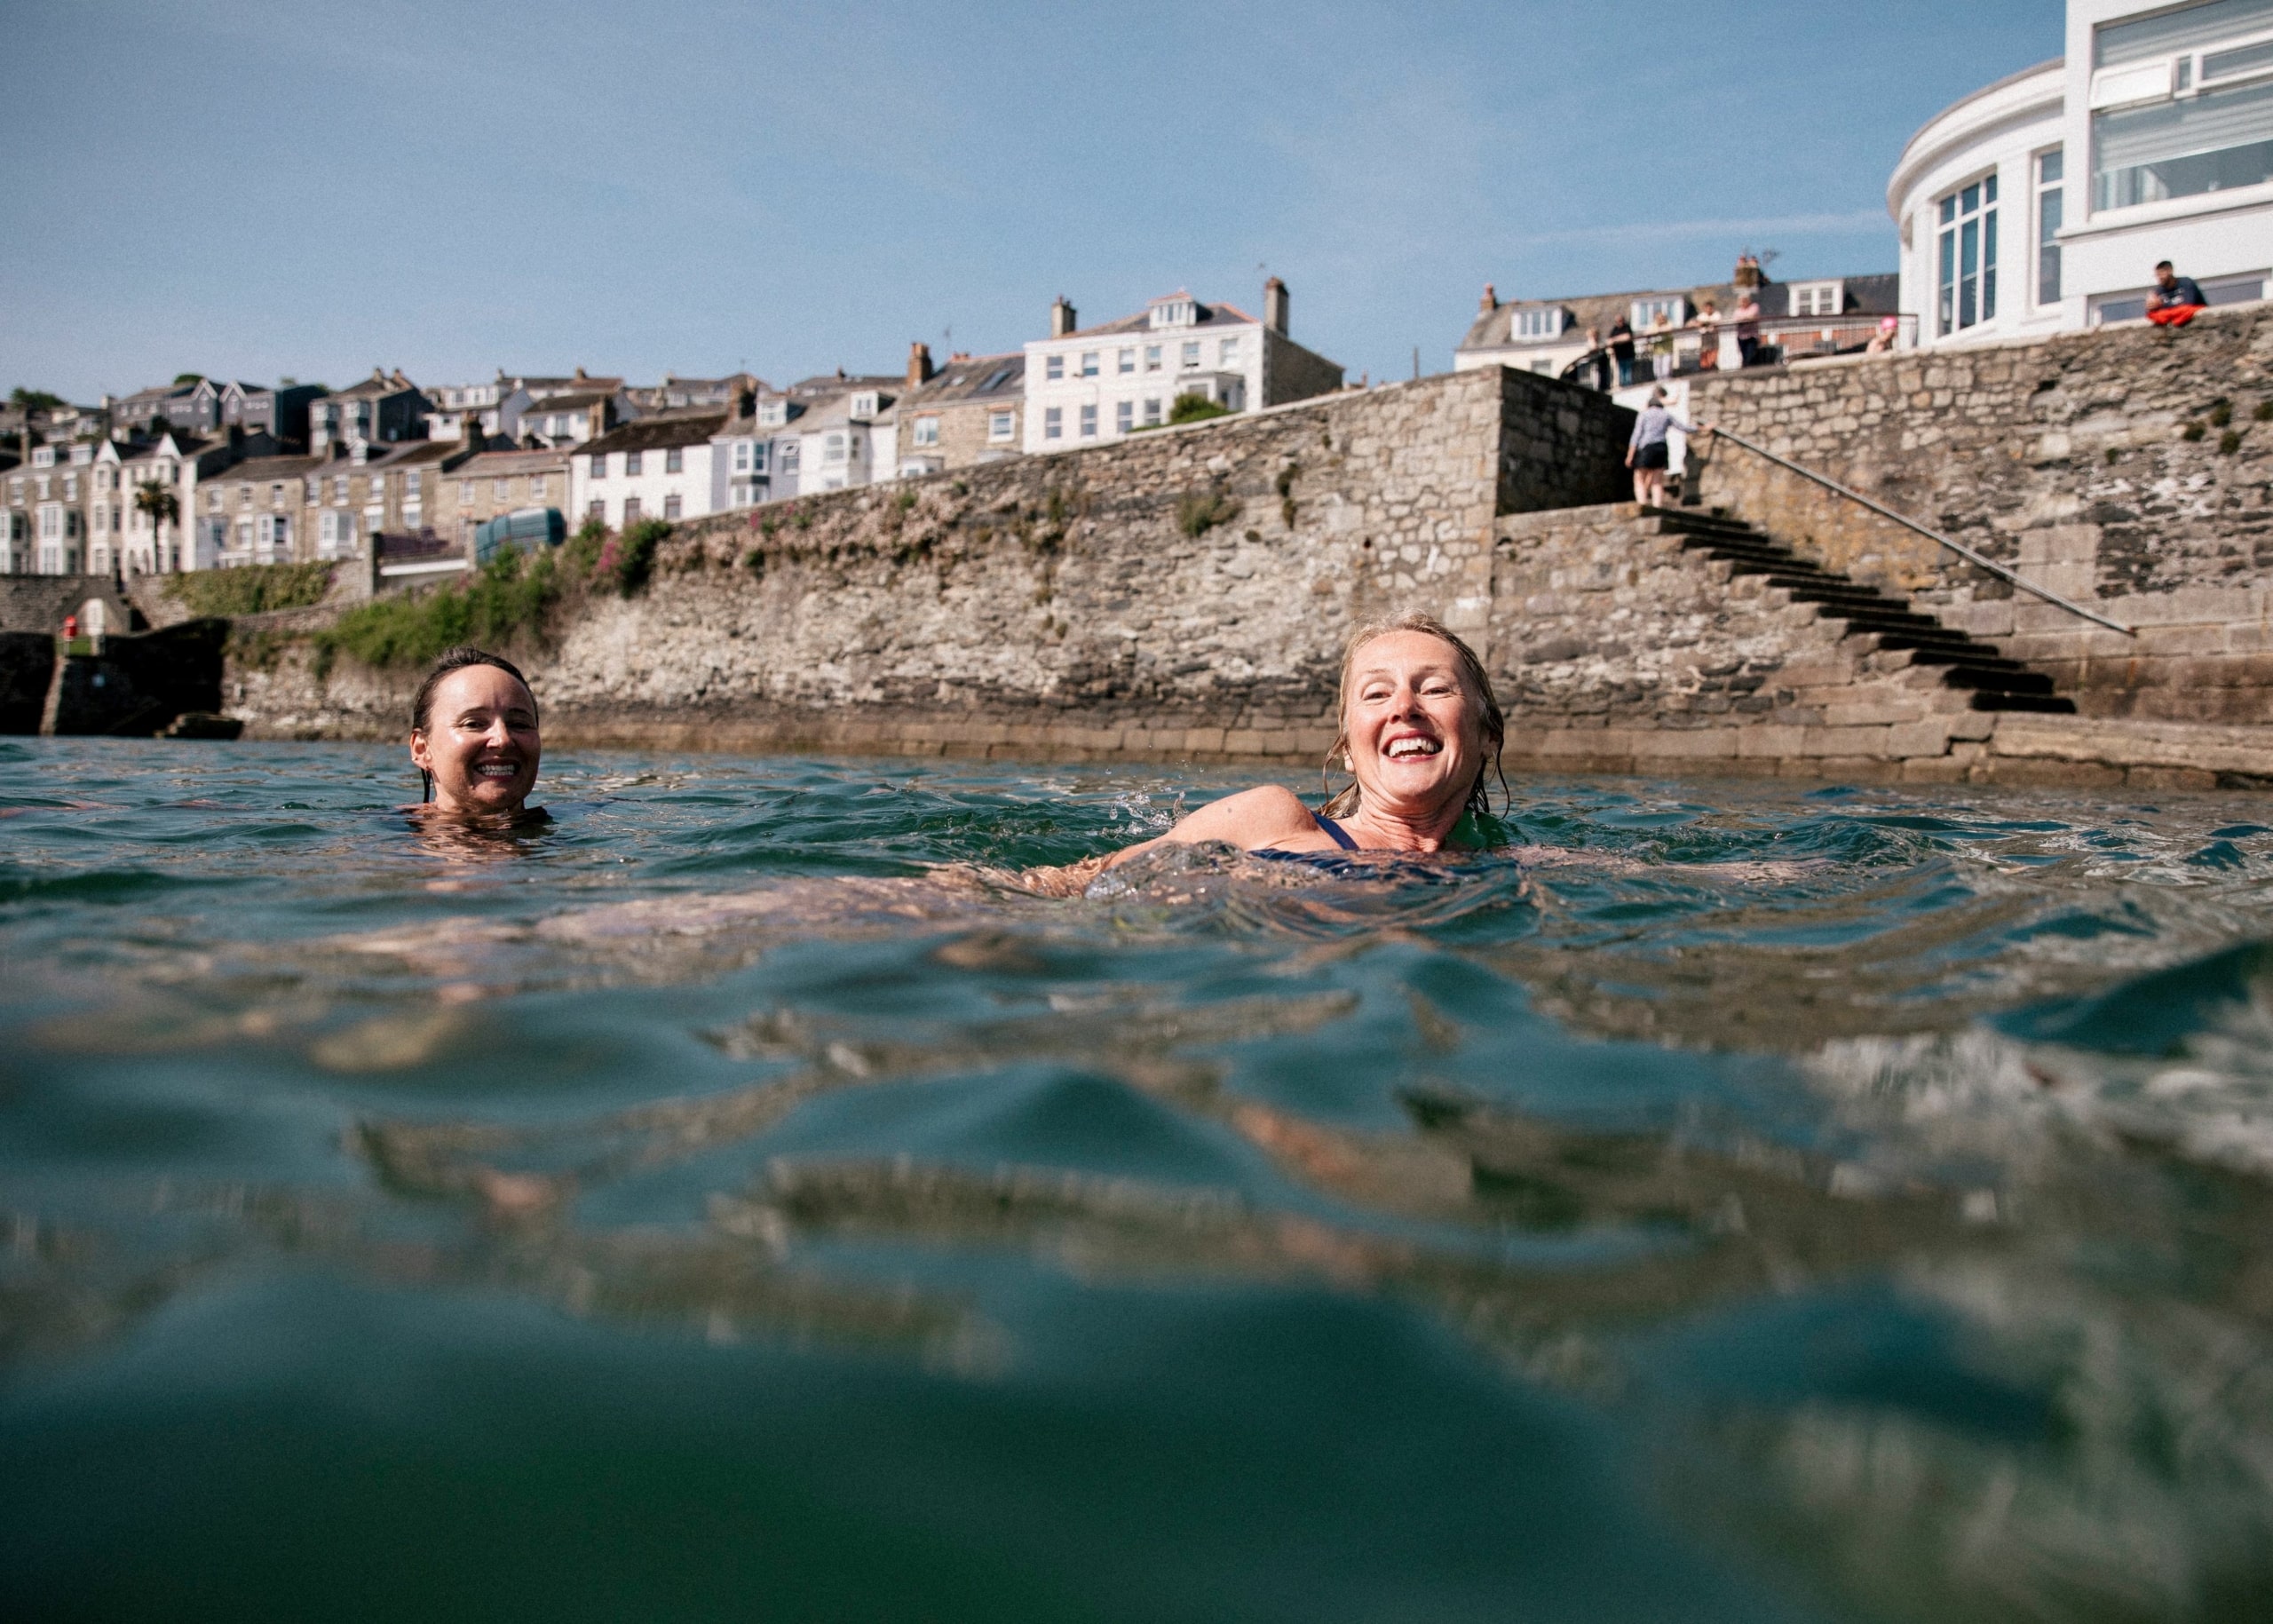 Cornish-summer-getaway-swimming